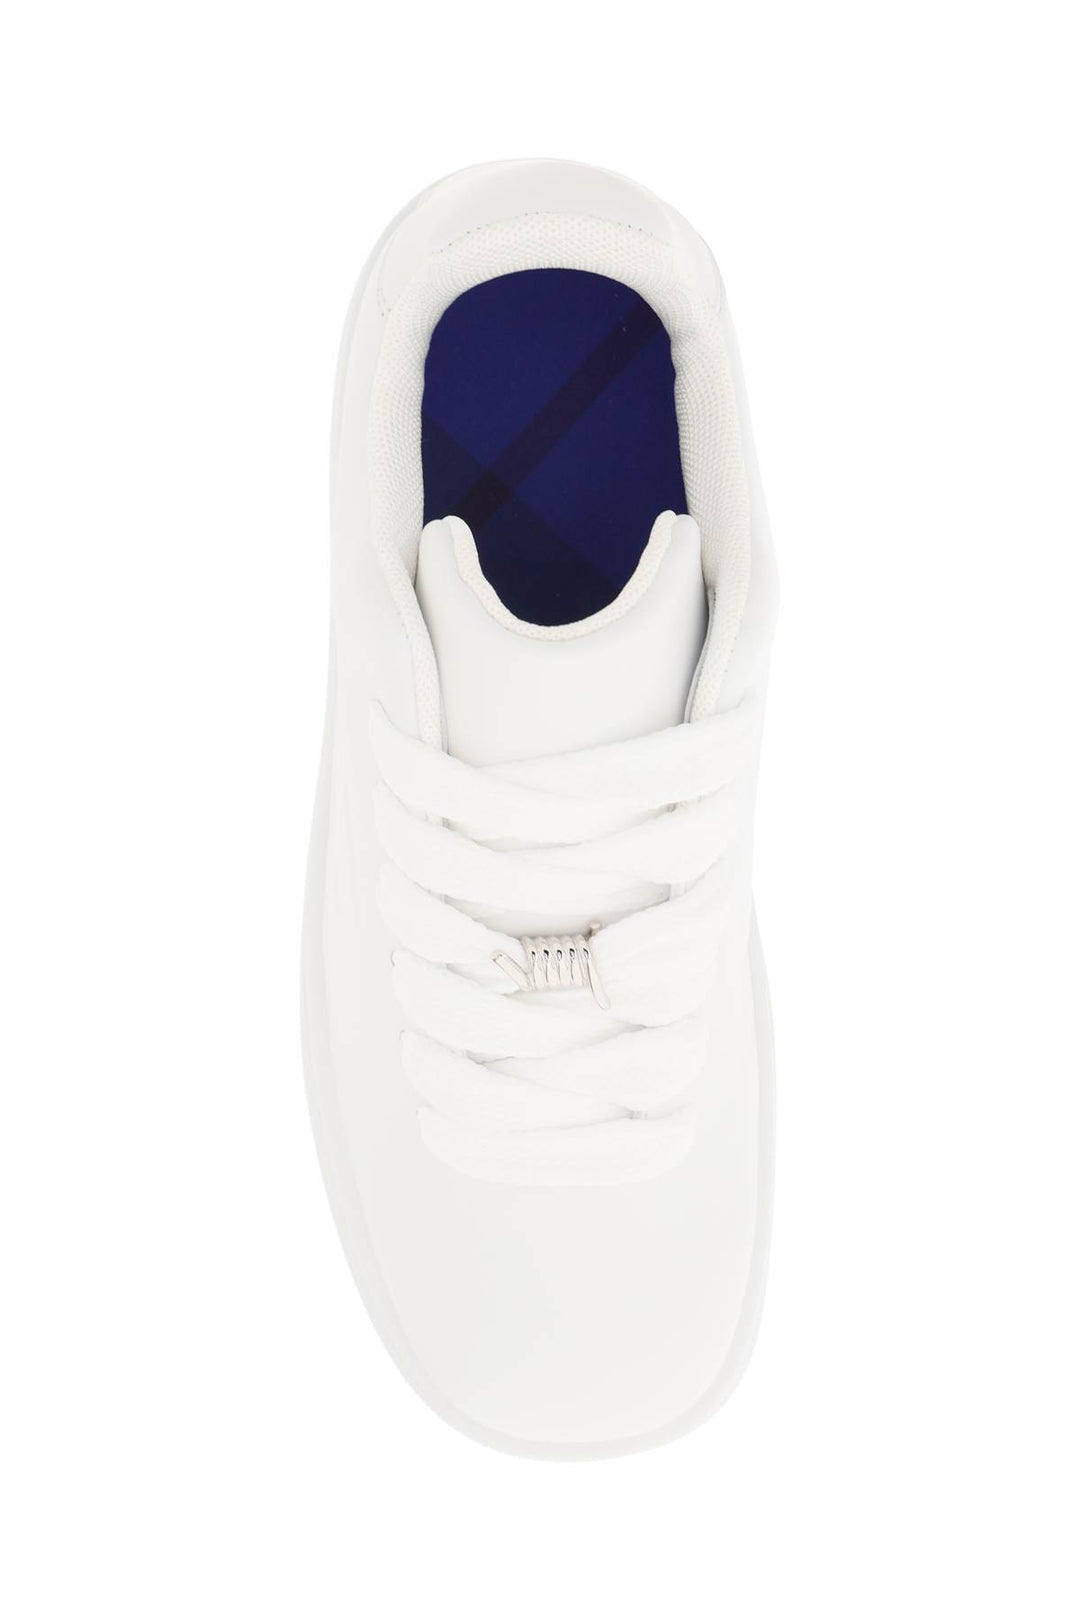 Burberry Leather Sneaker Storage Box   White